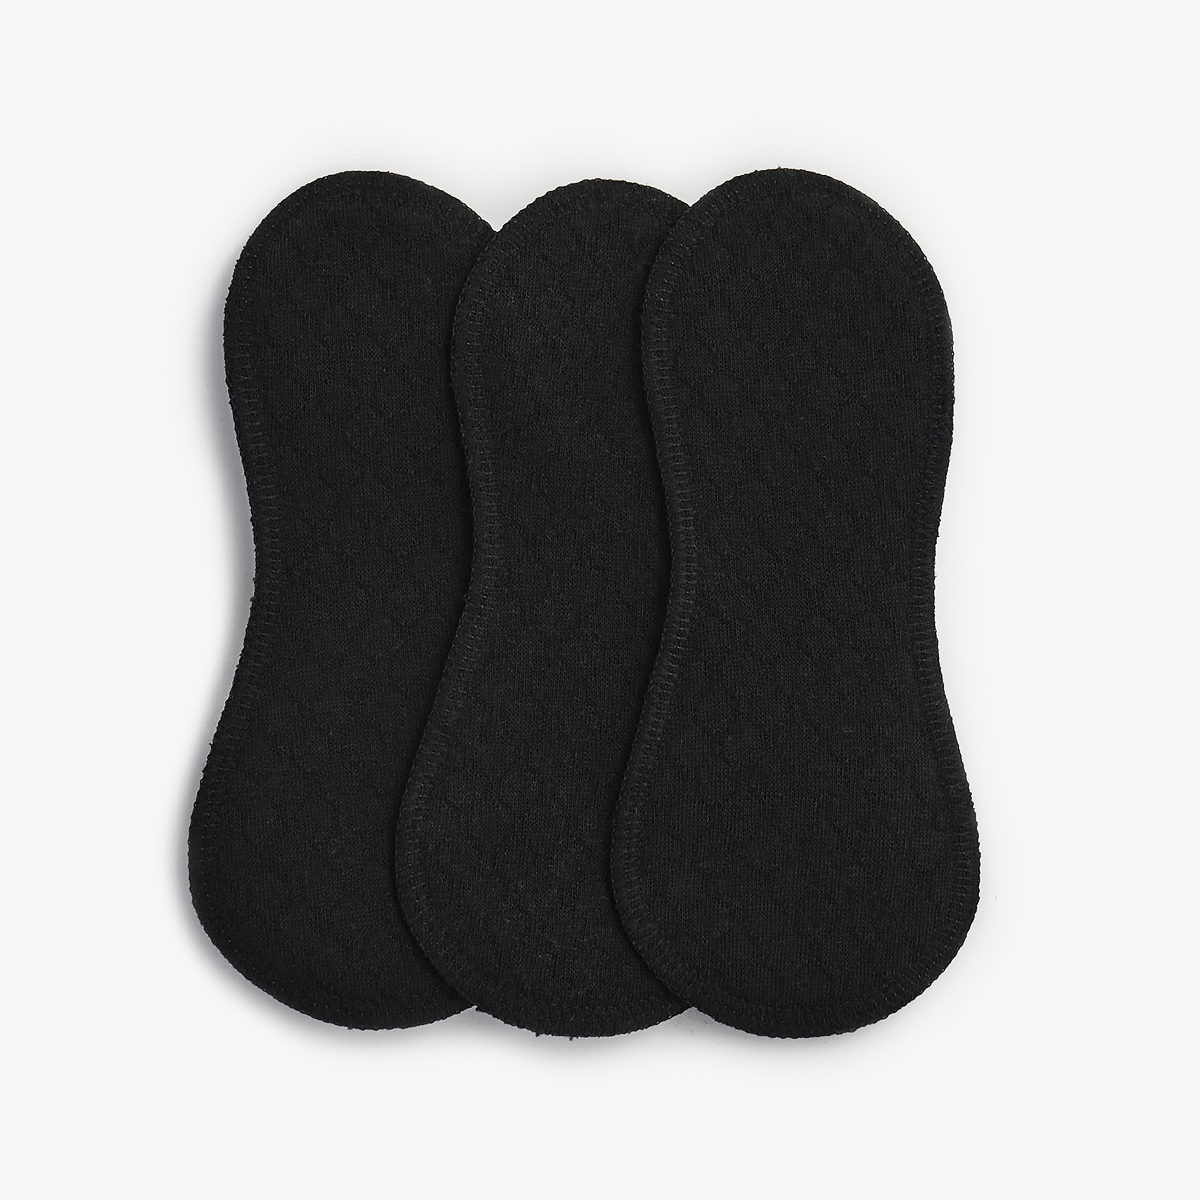 Workout Pads mini ekologisk bomull/polyester Imse 3-pack svart